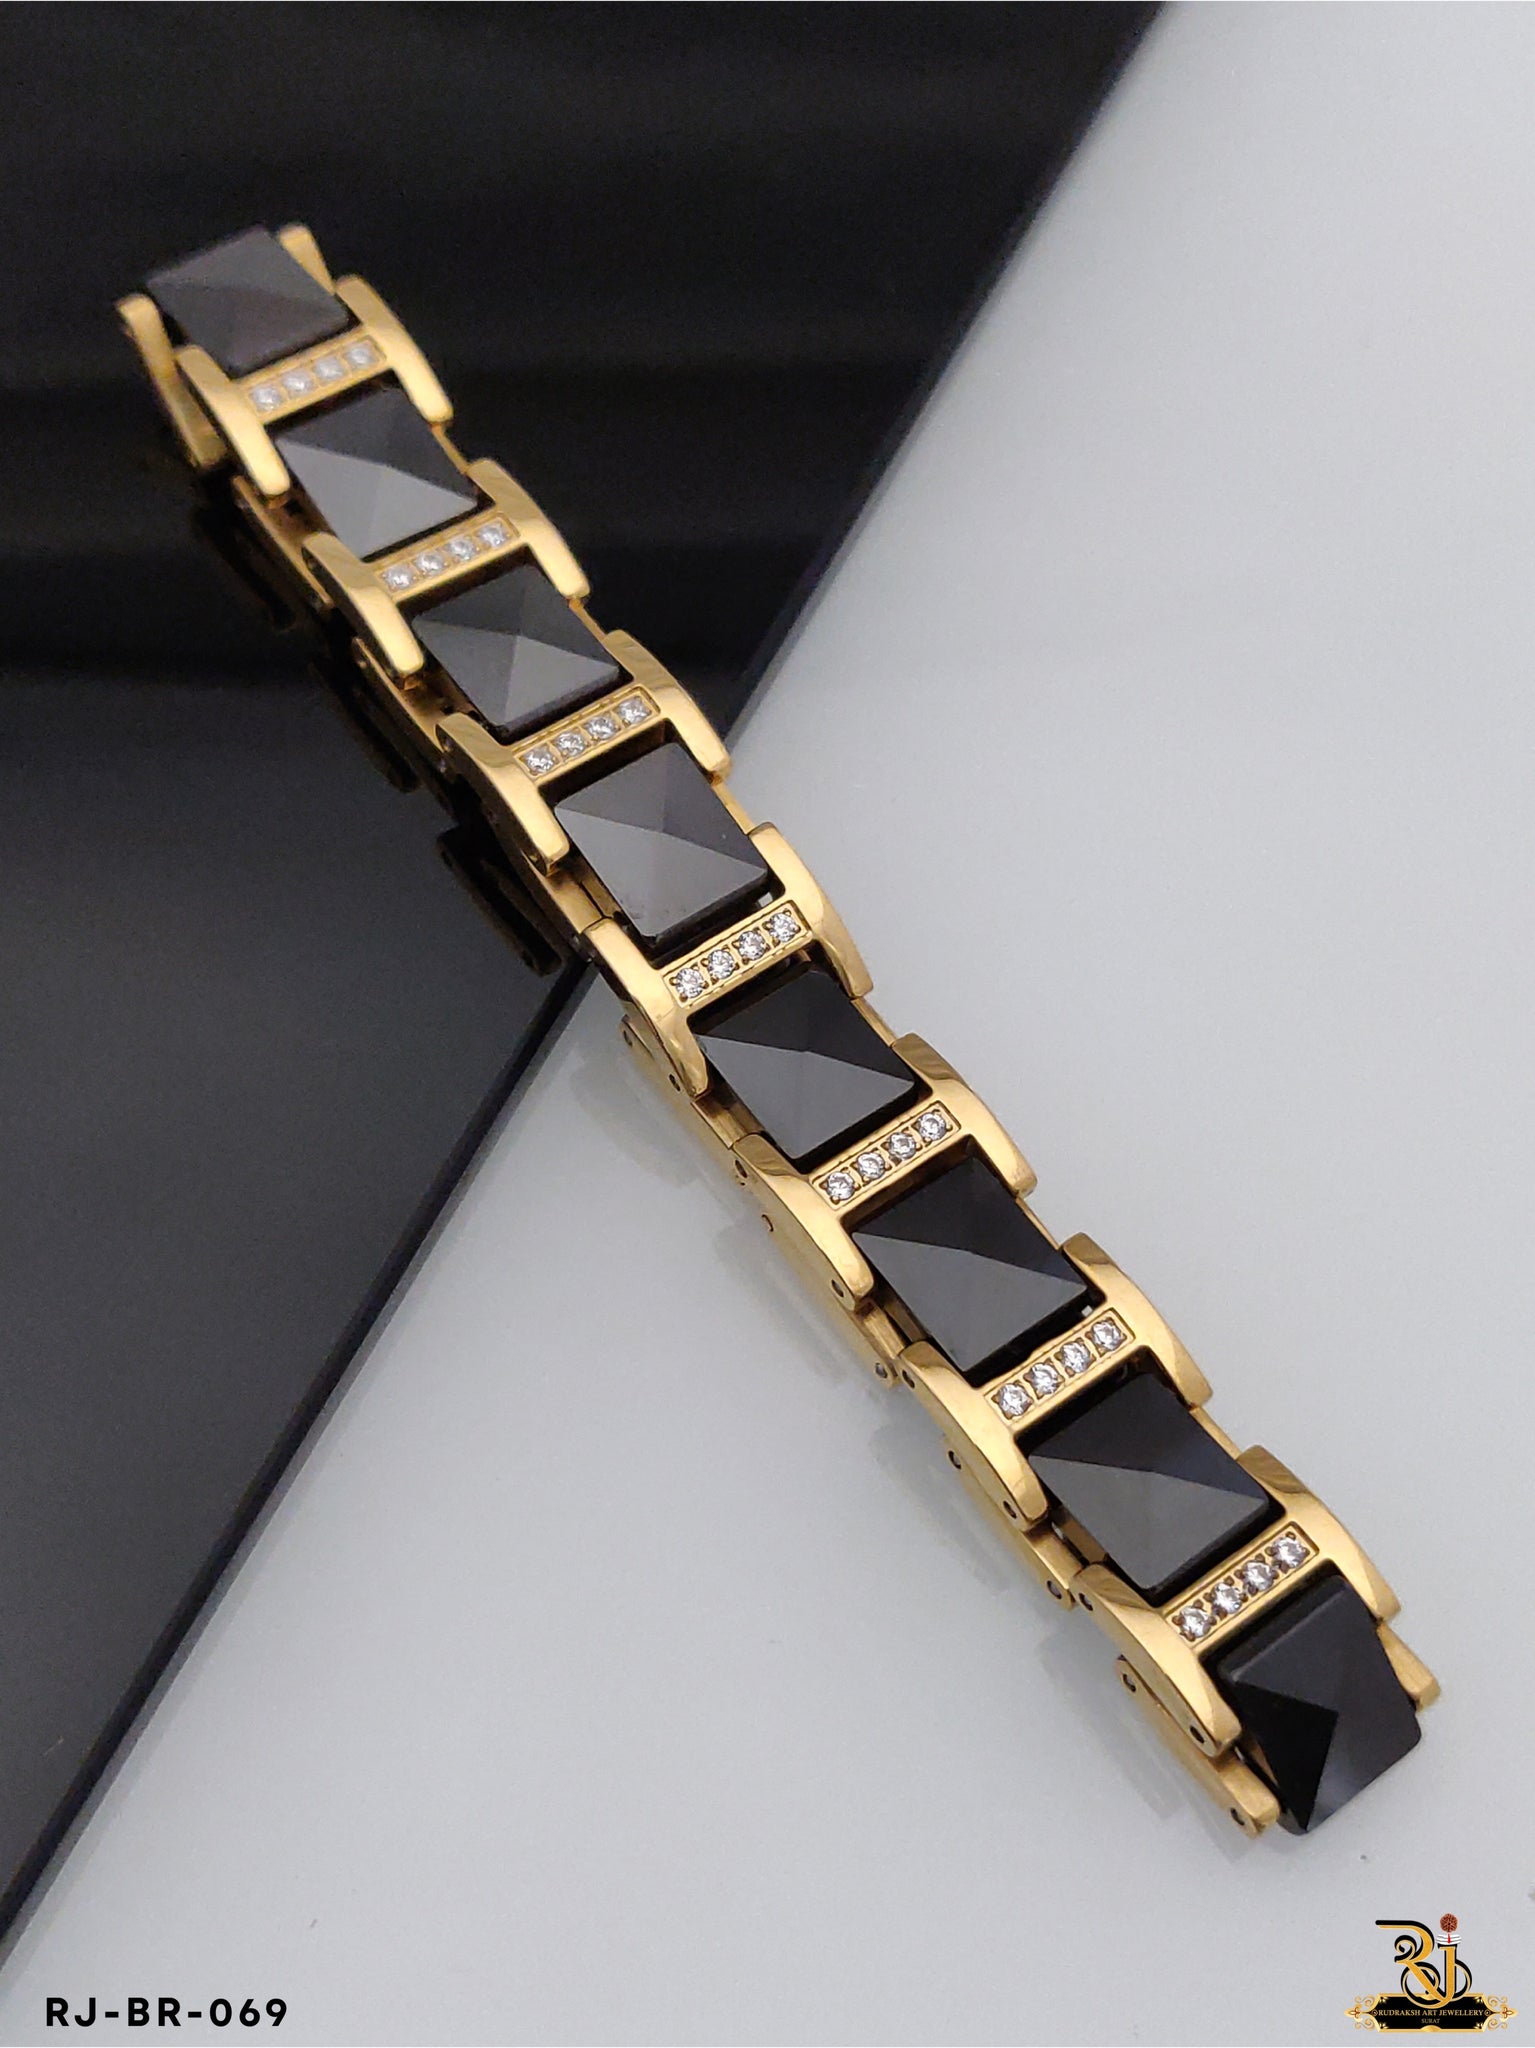 22 Carat Gold Ladies Bracelet with Black Beads - £250.00 (SKU:28910)